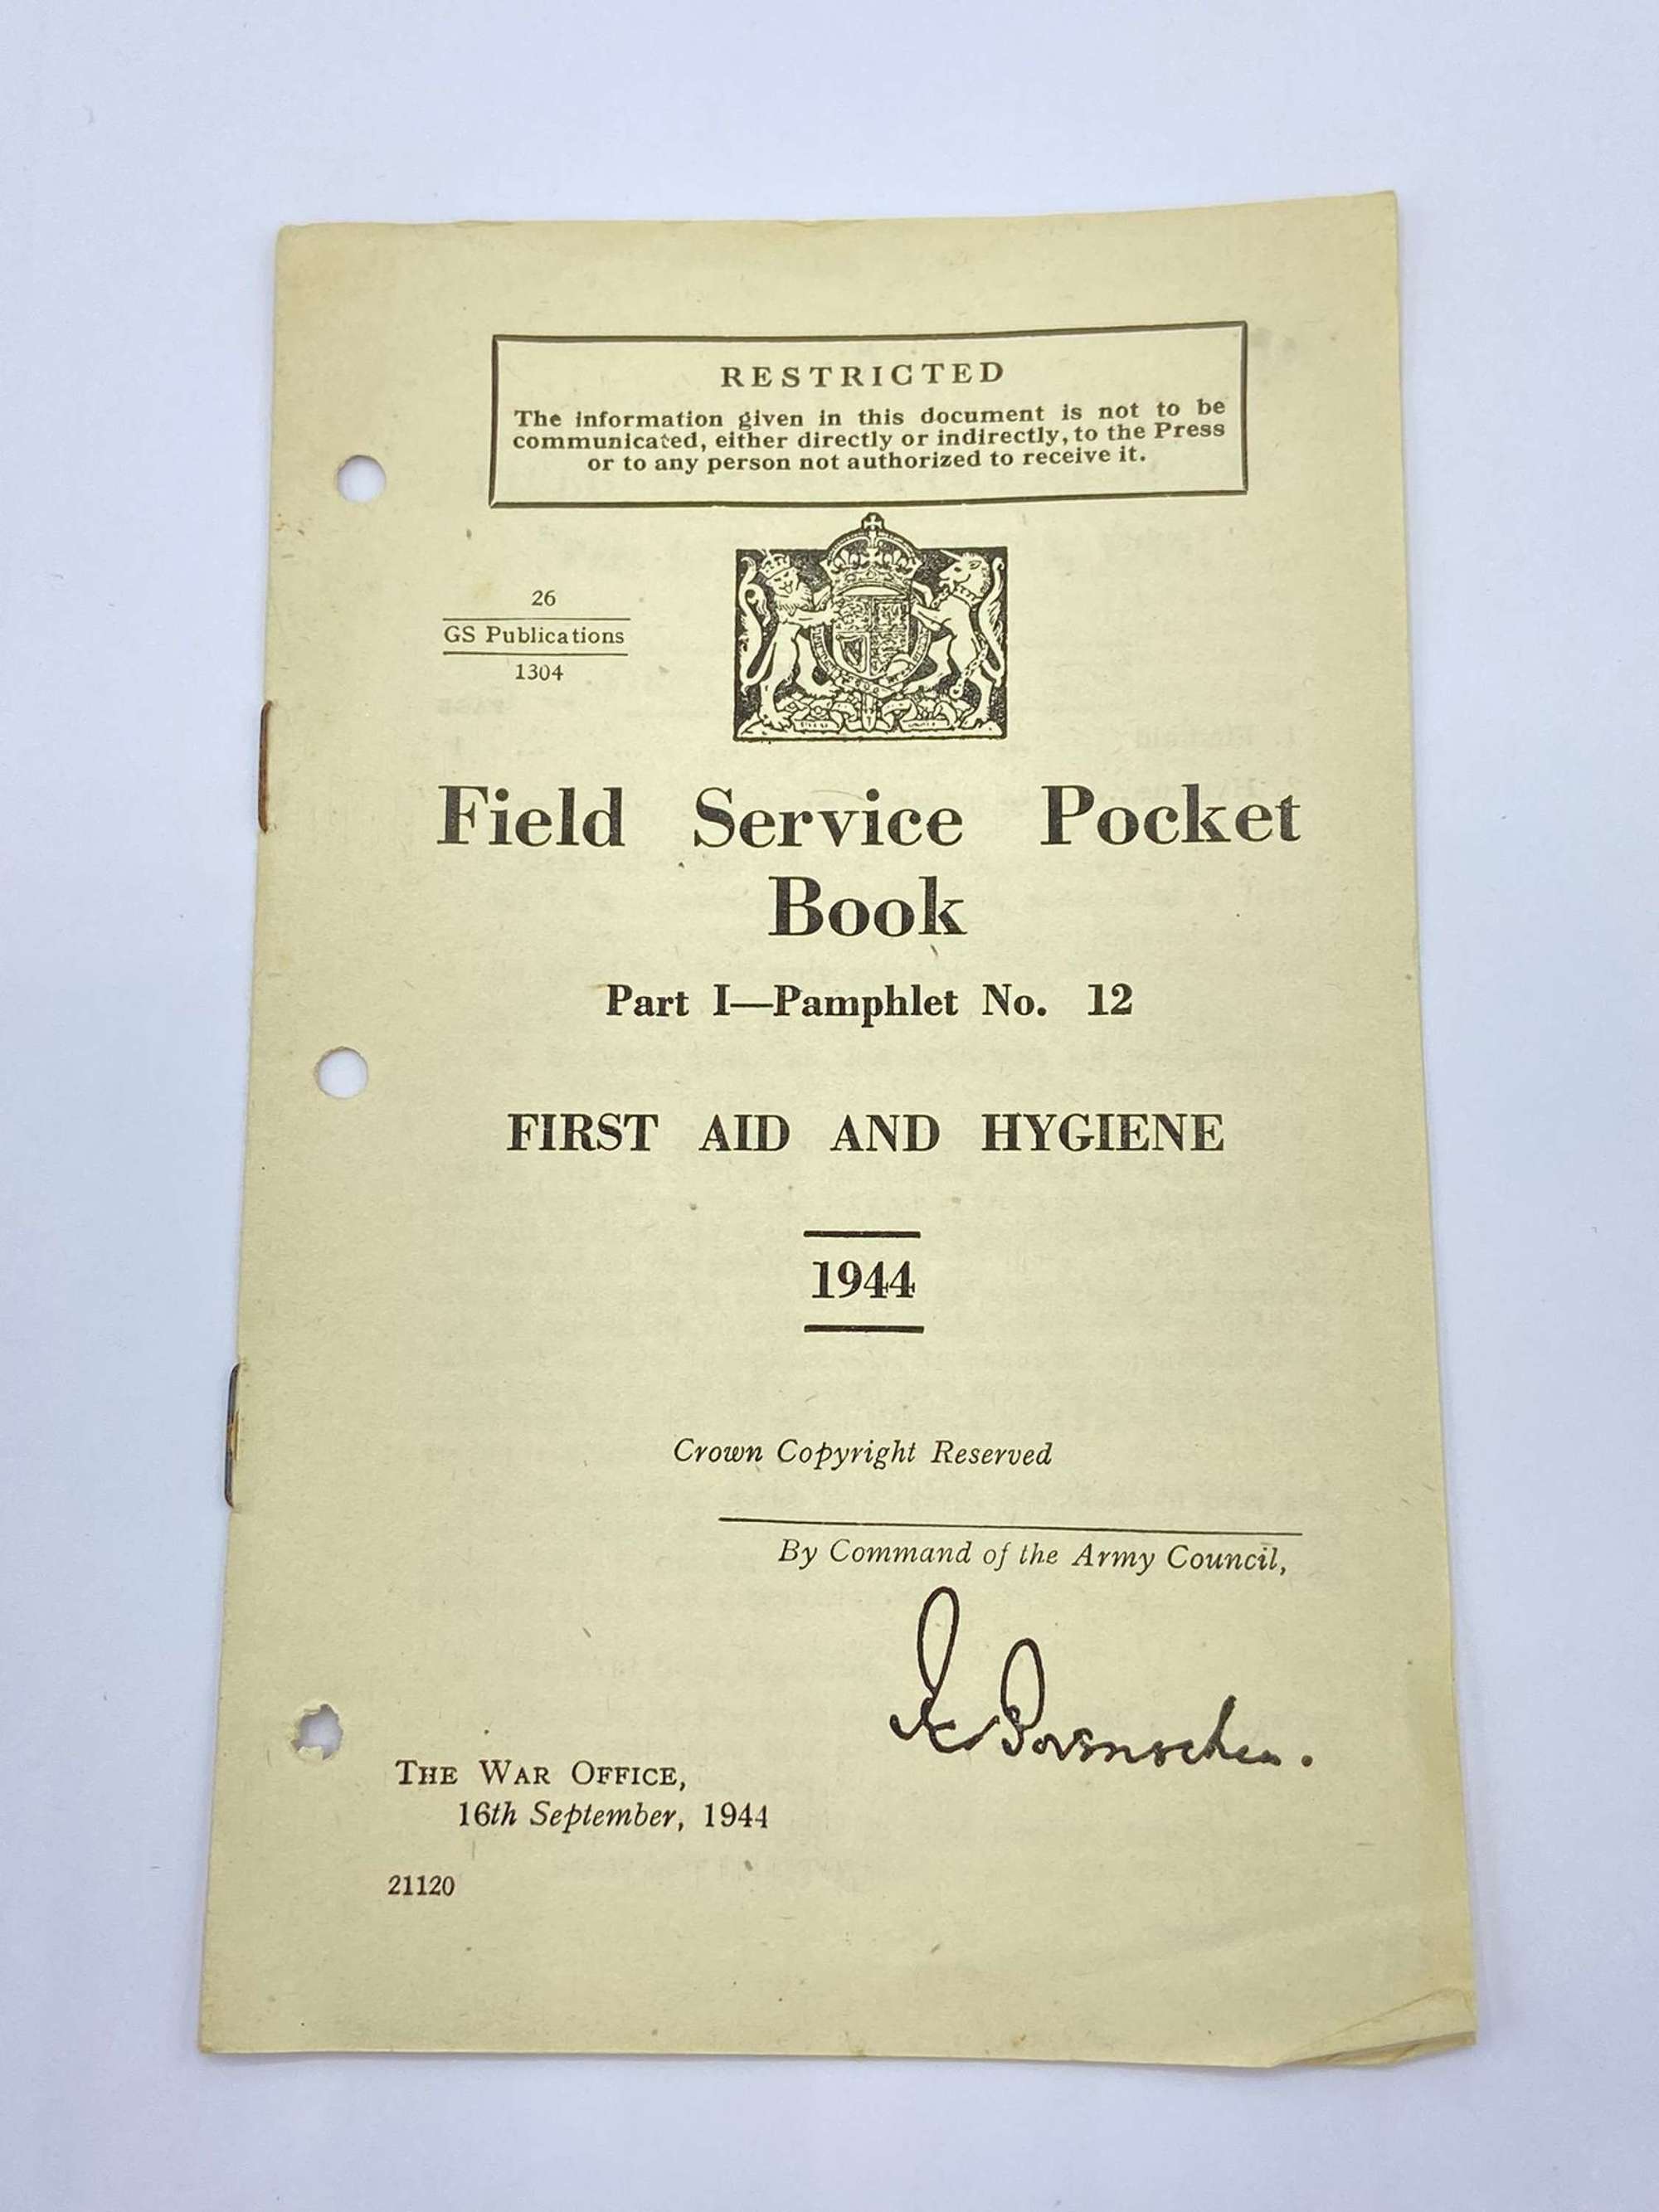 WW2 Field Service Pocket Book First Aid & Hygiene 1944 Pamphlet